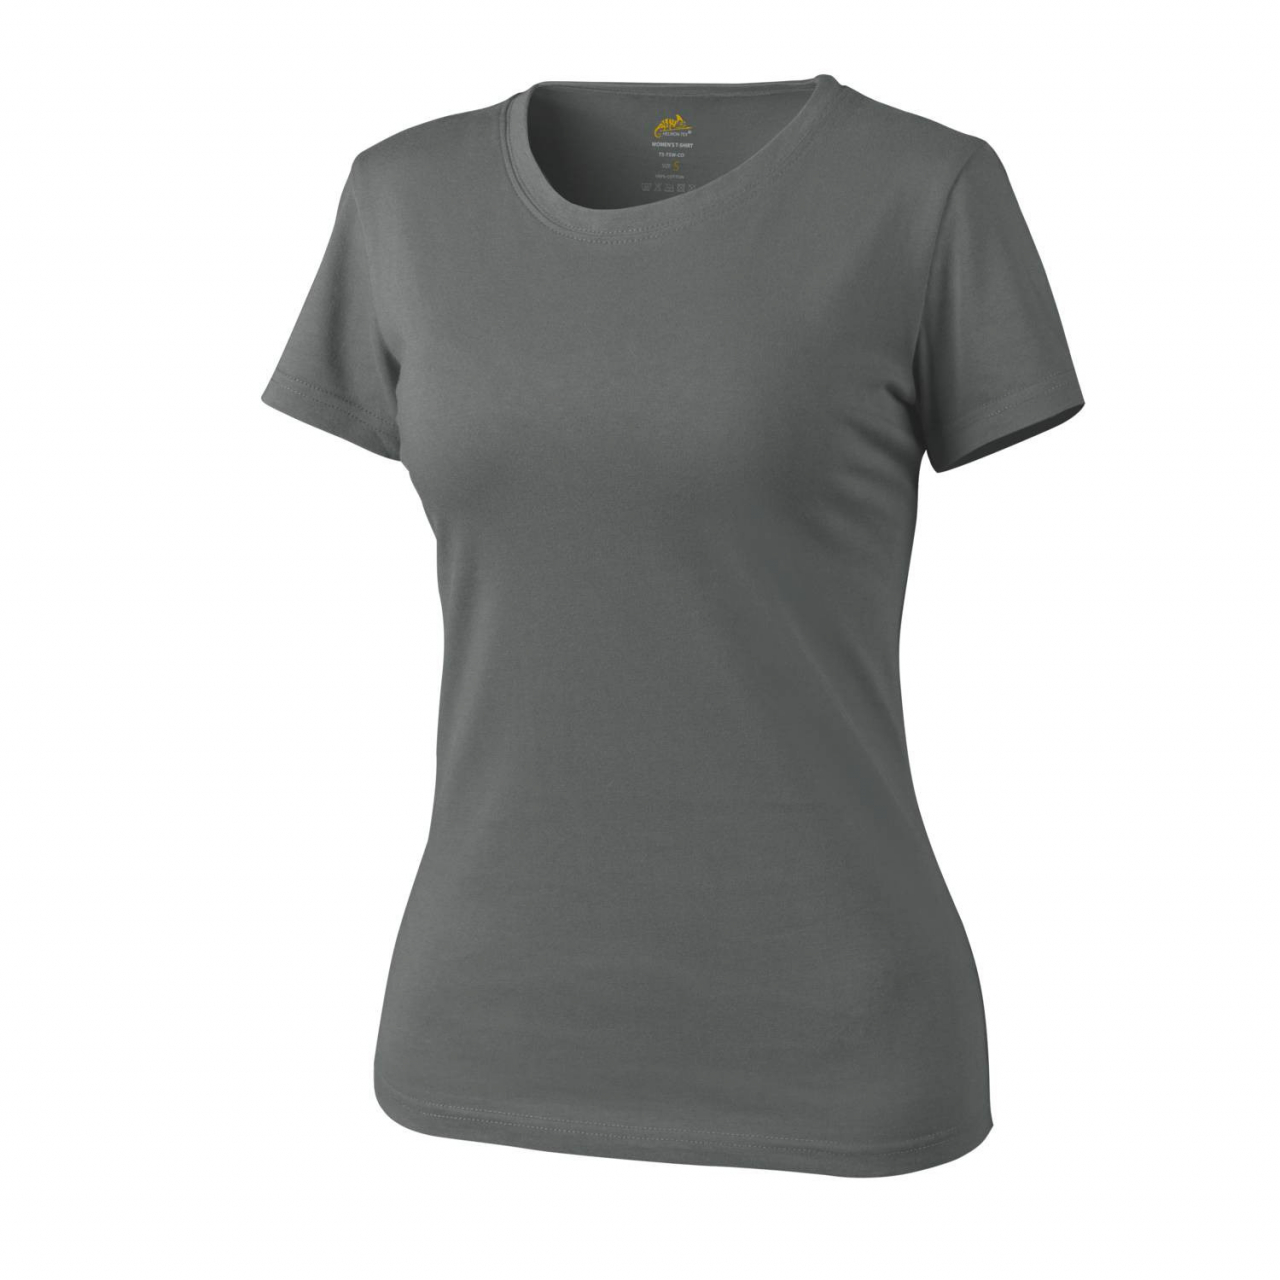 Tričko dámské Helikon Womens Shirt - šedé, XL